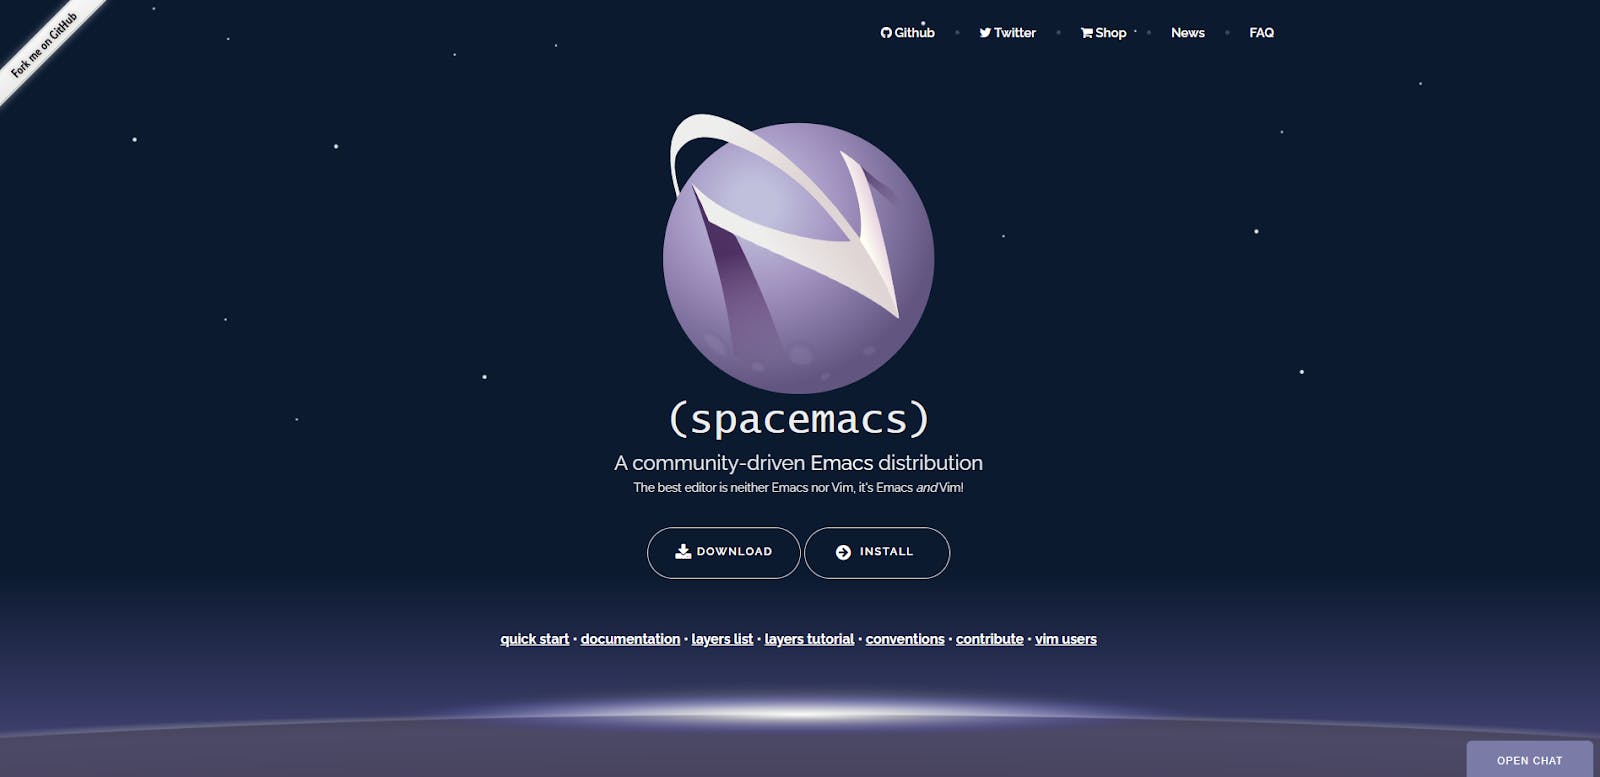 spacemacs landing page